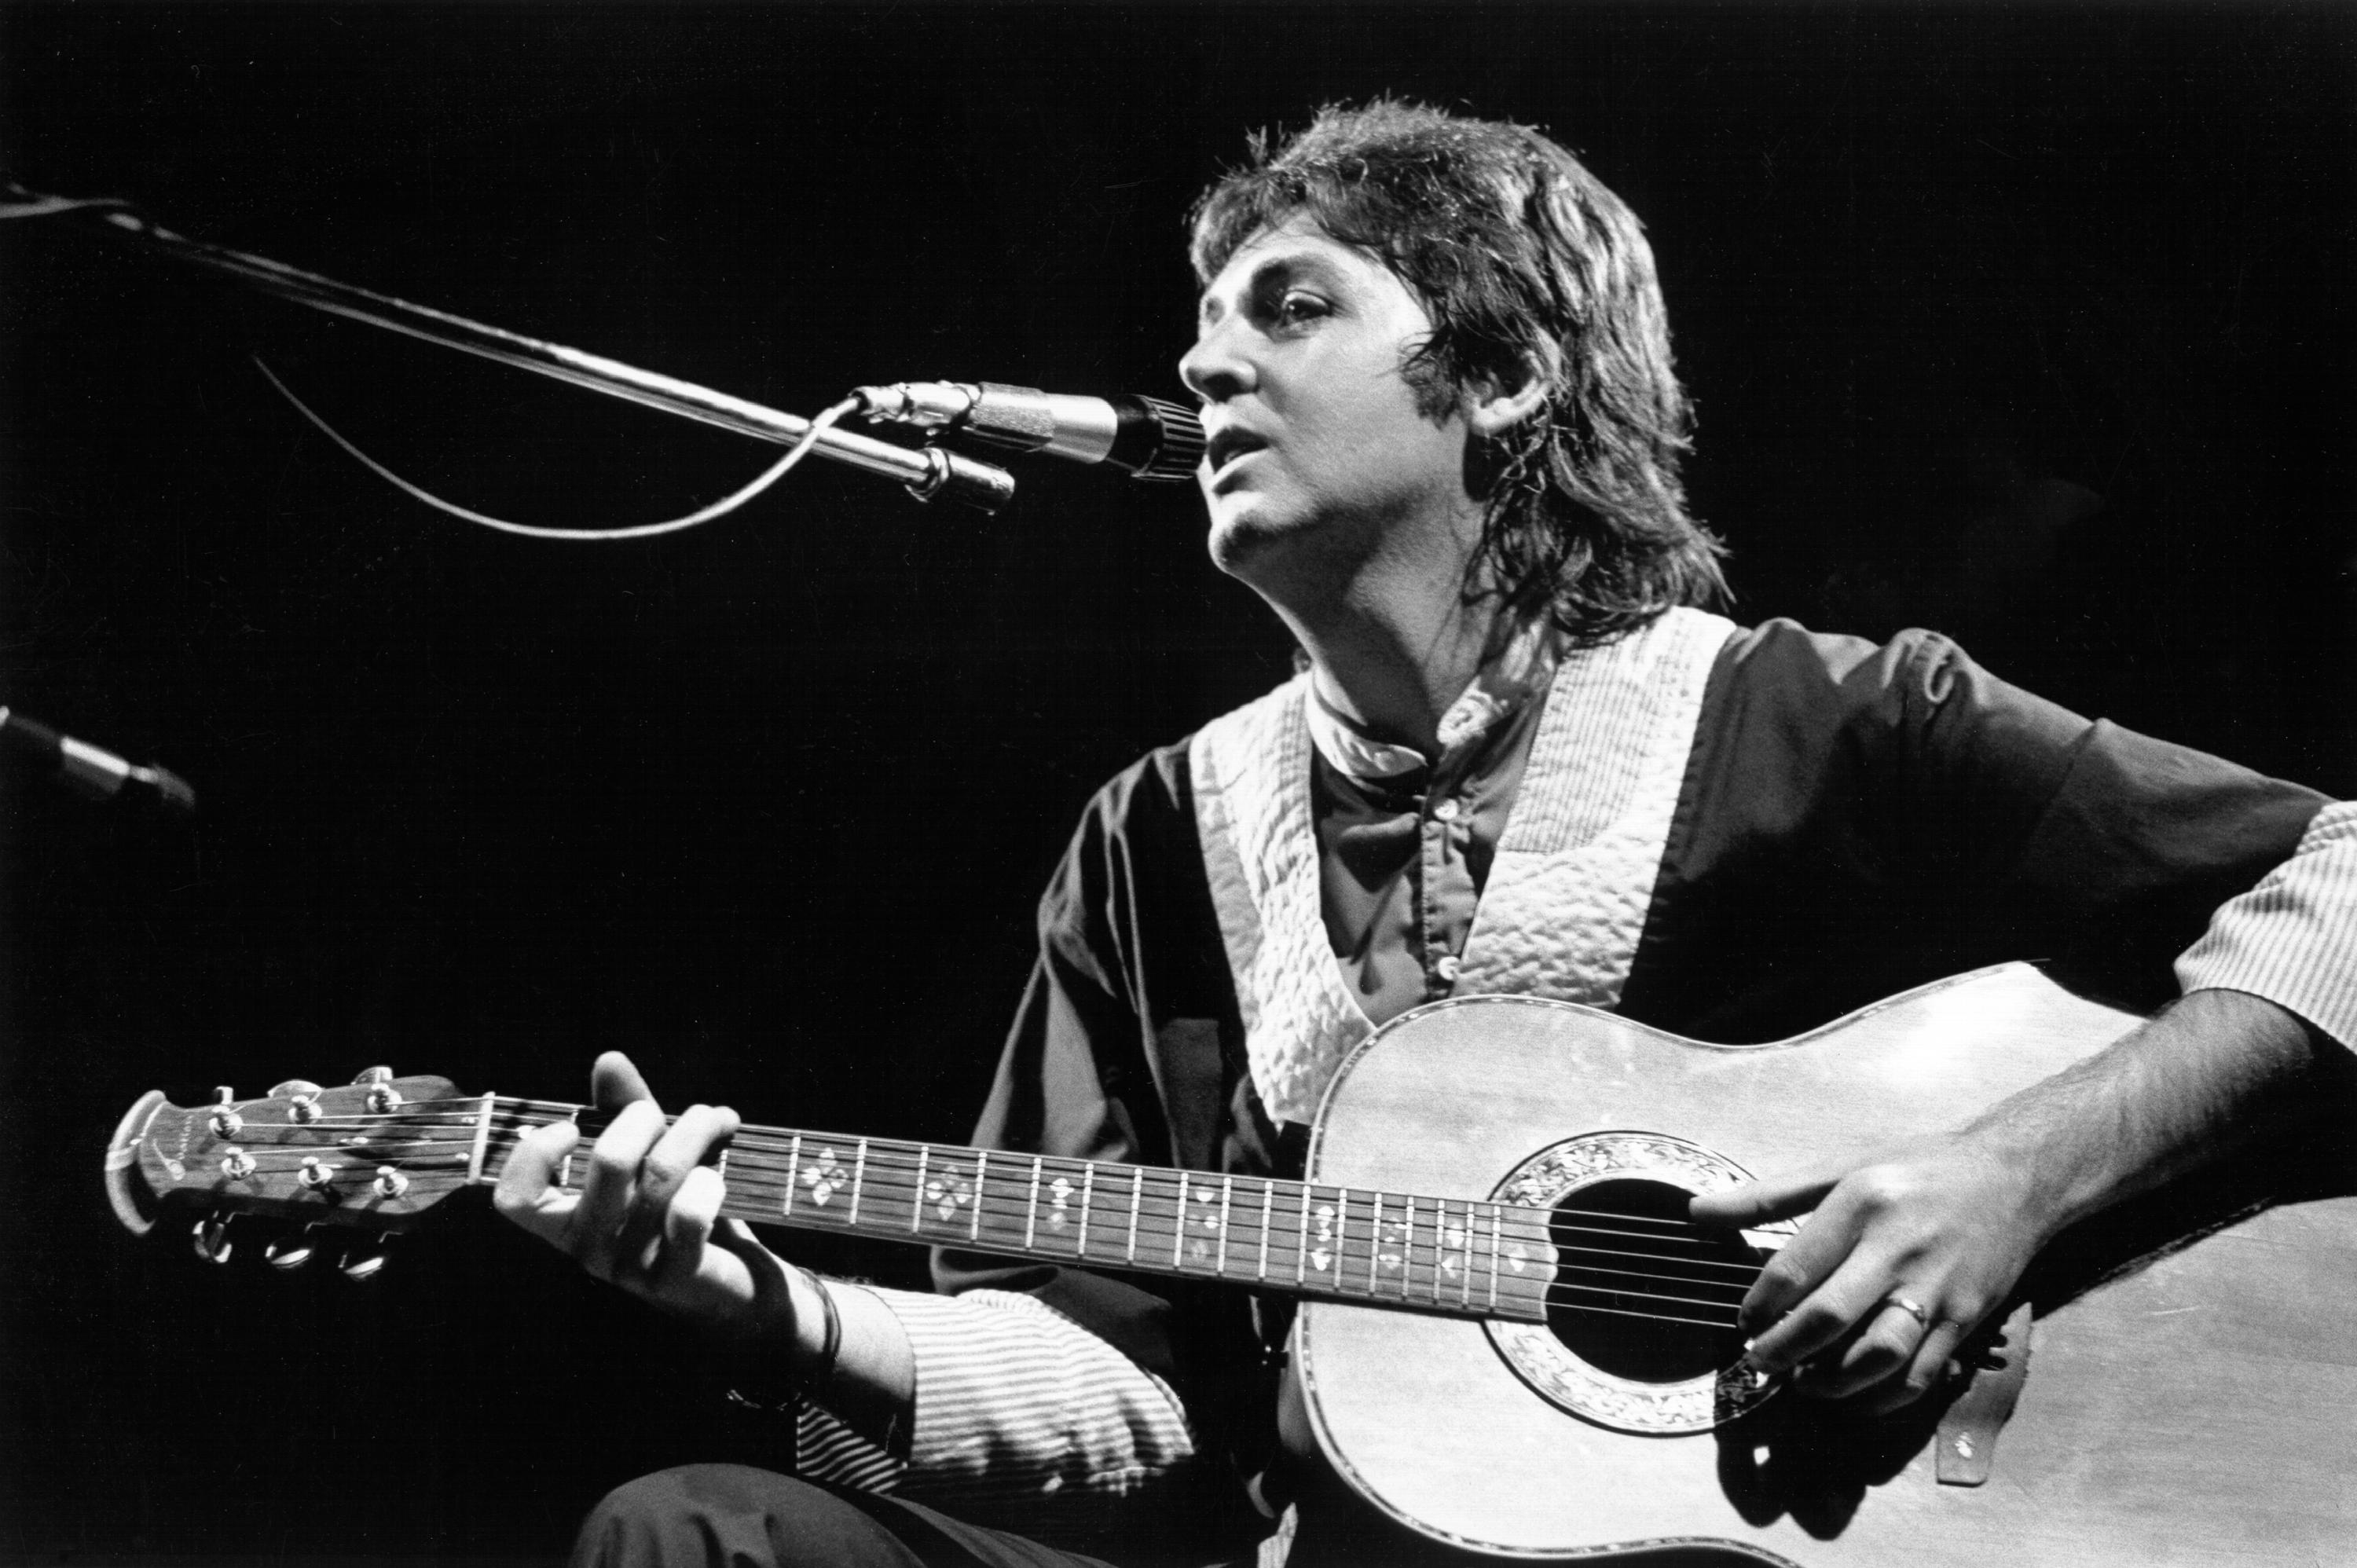 Paul McCartney playing songs on his guitar